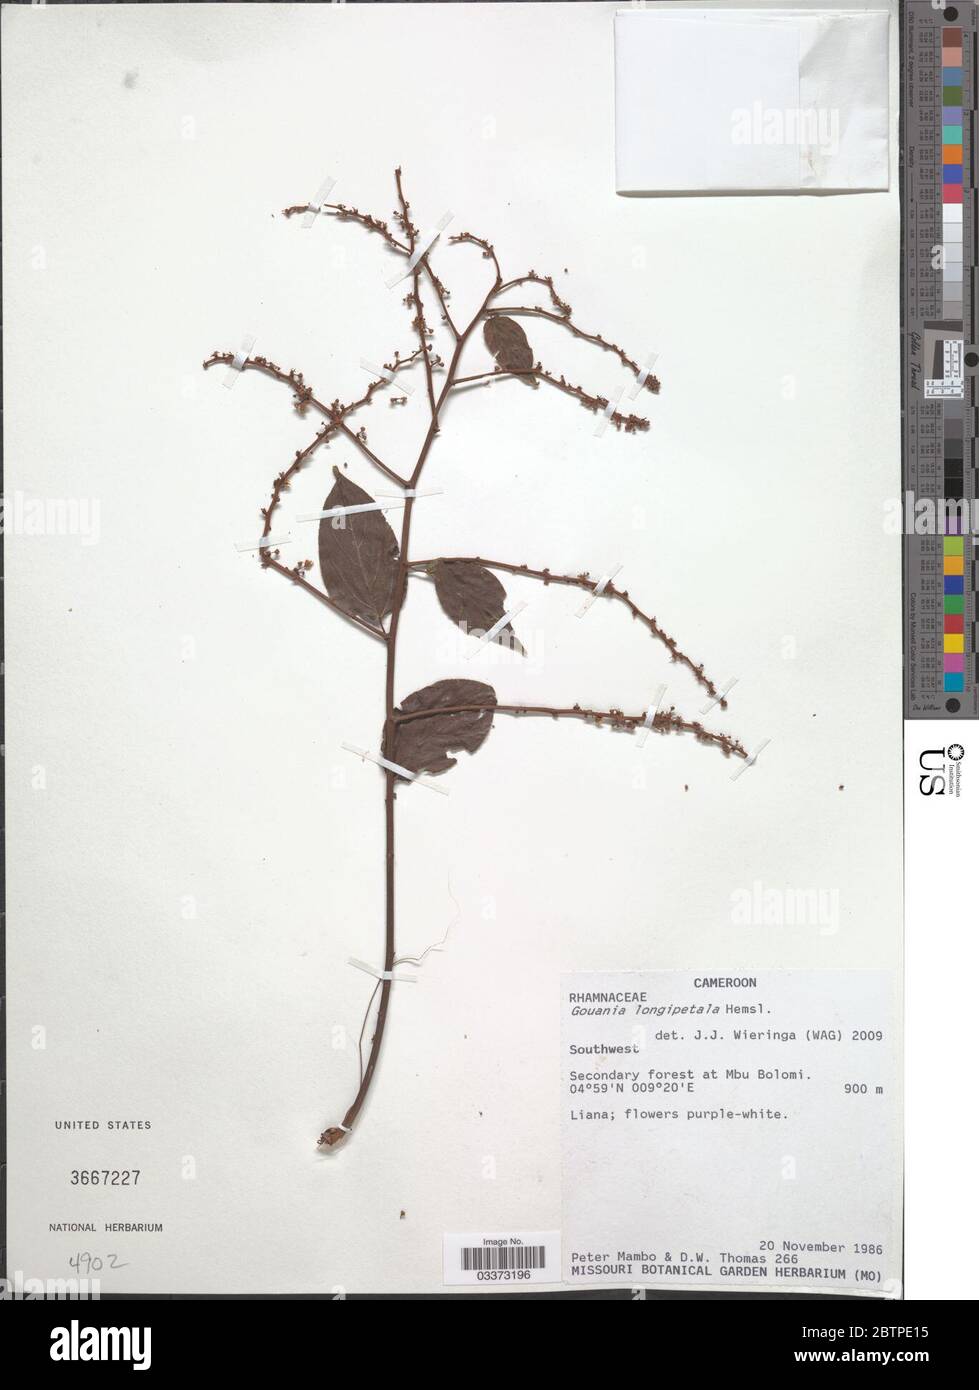 Gouania longipetala Hemsl. Stock Photo